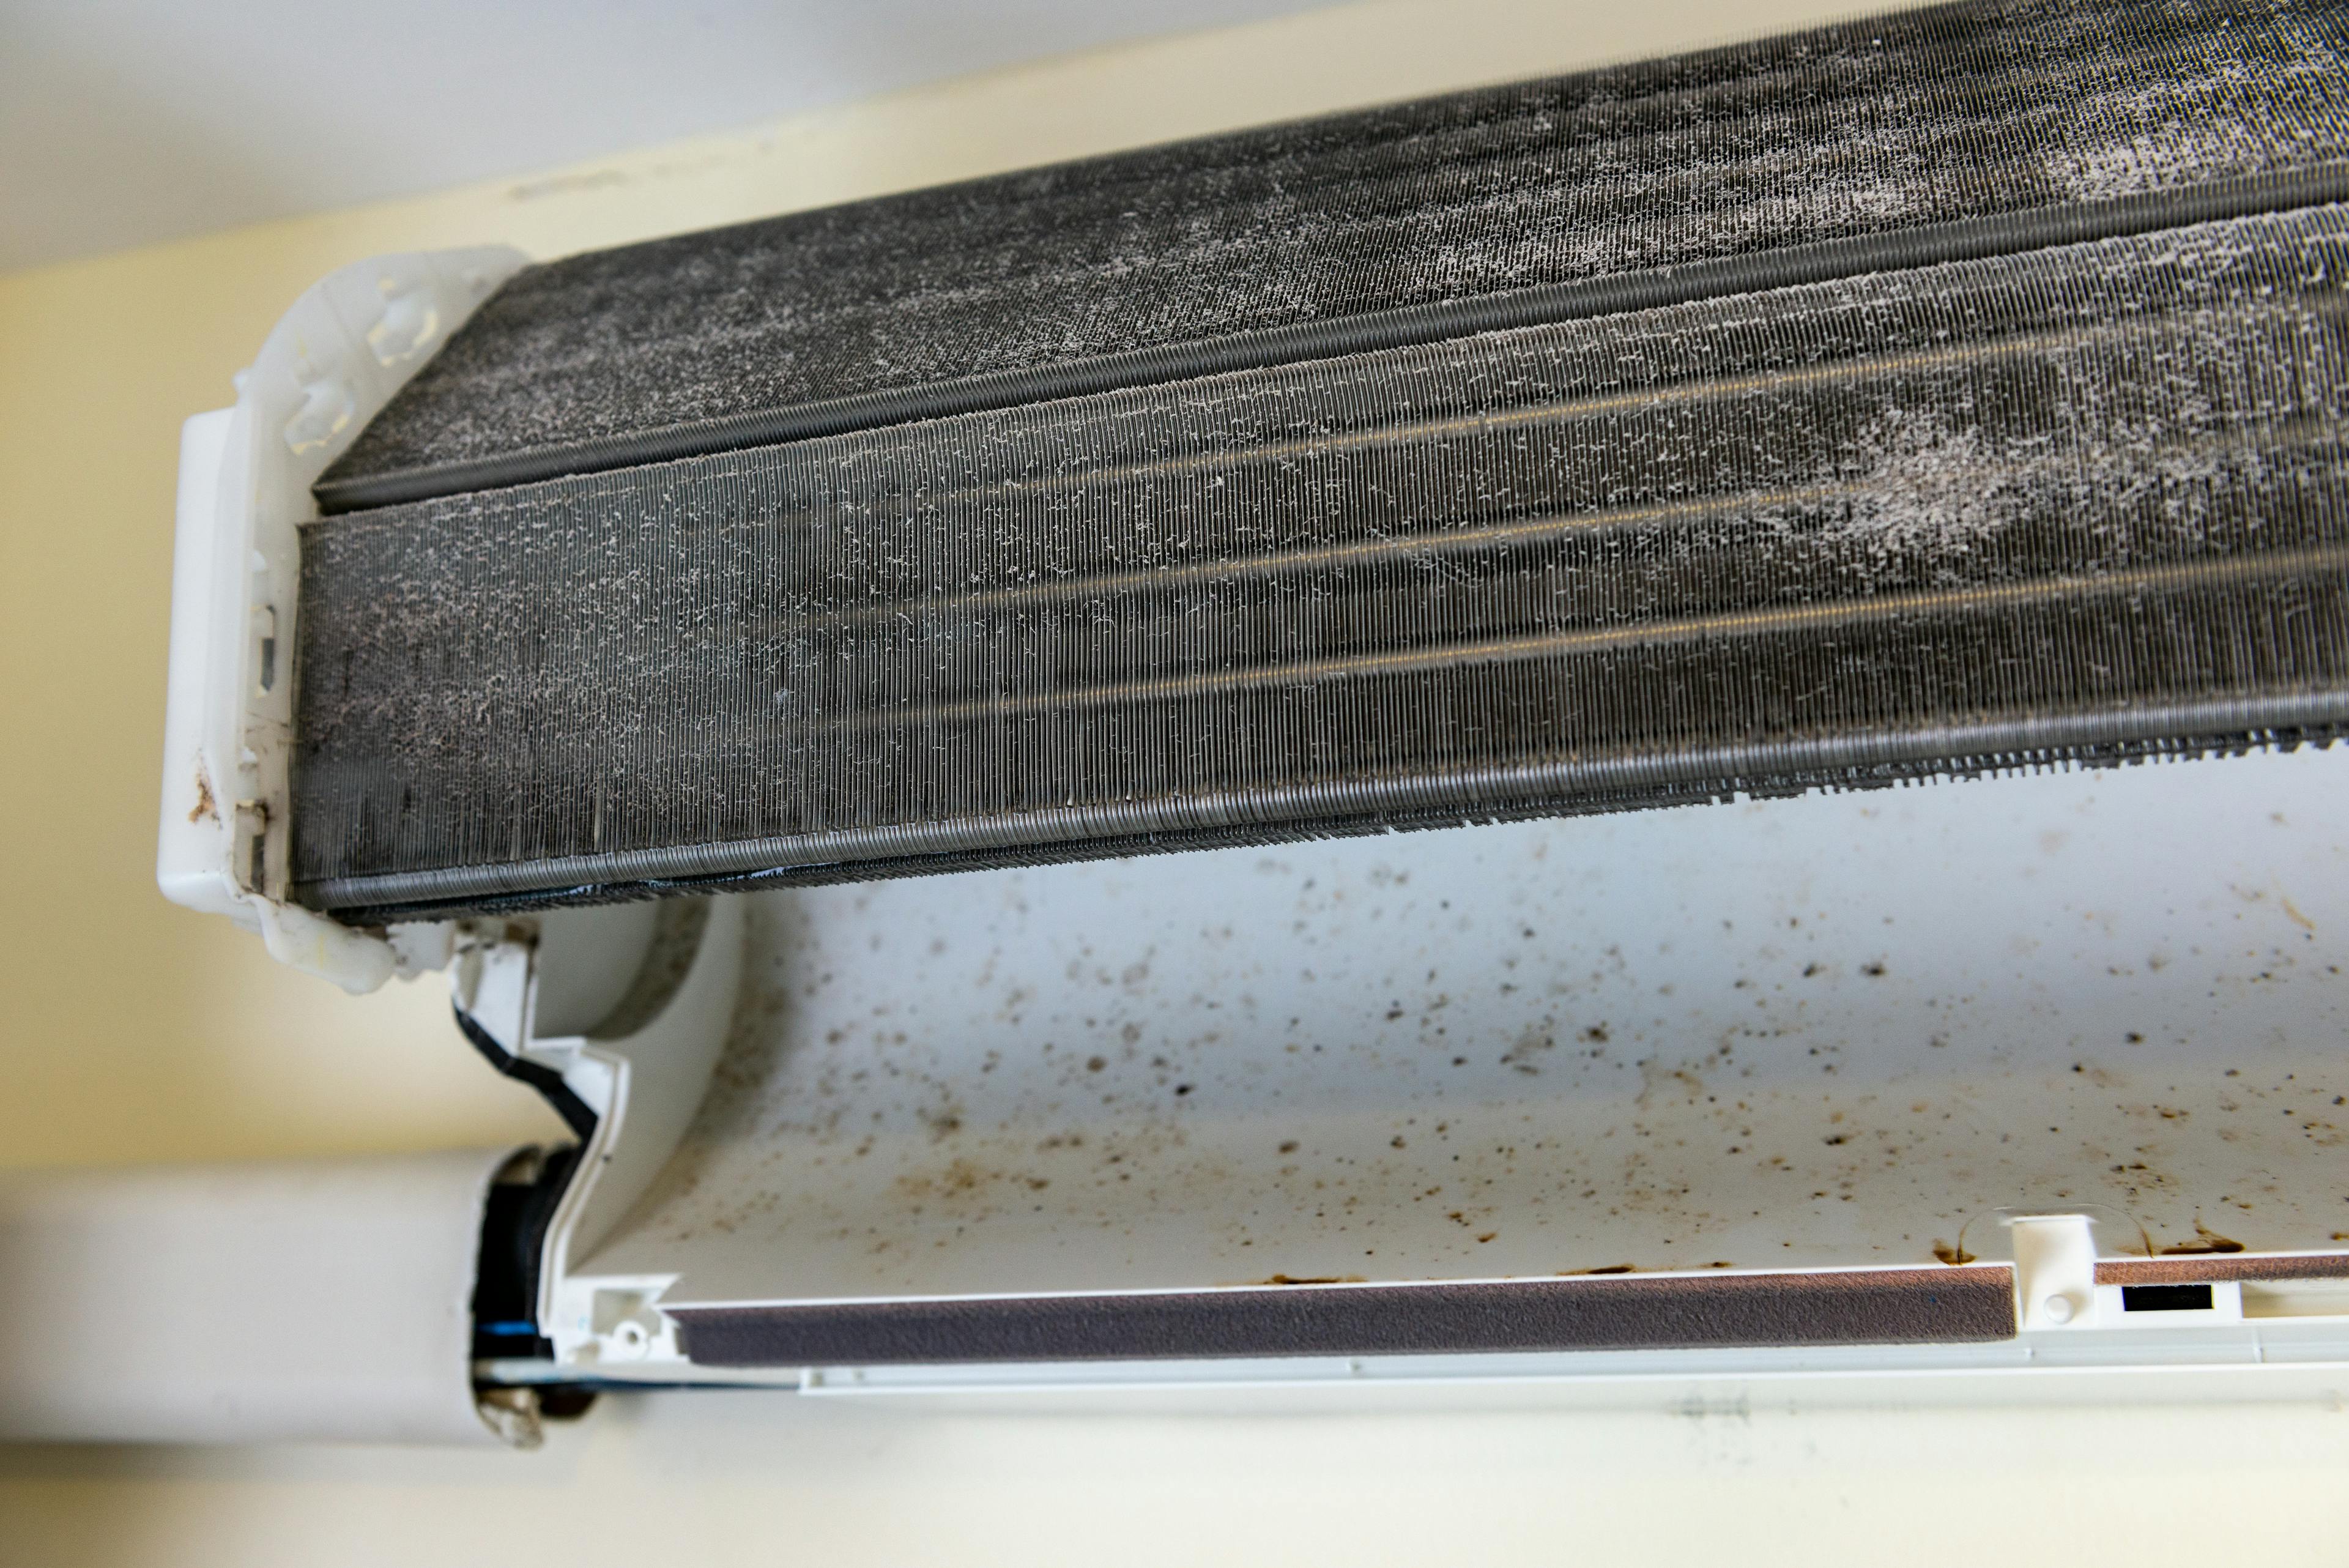 dirty aircon evaporator coil